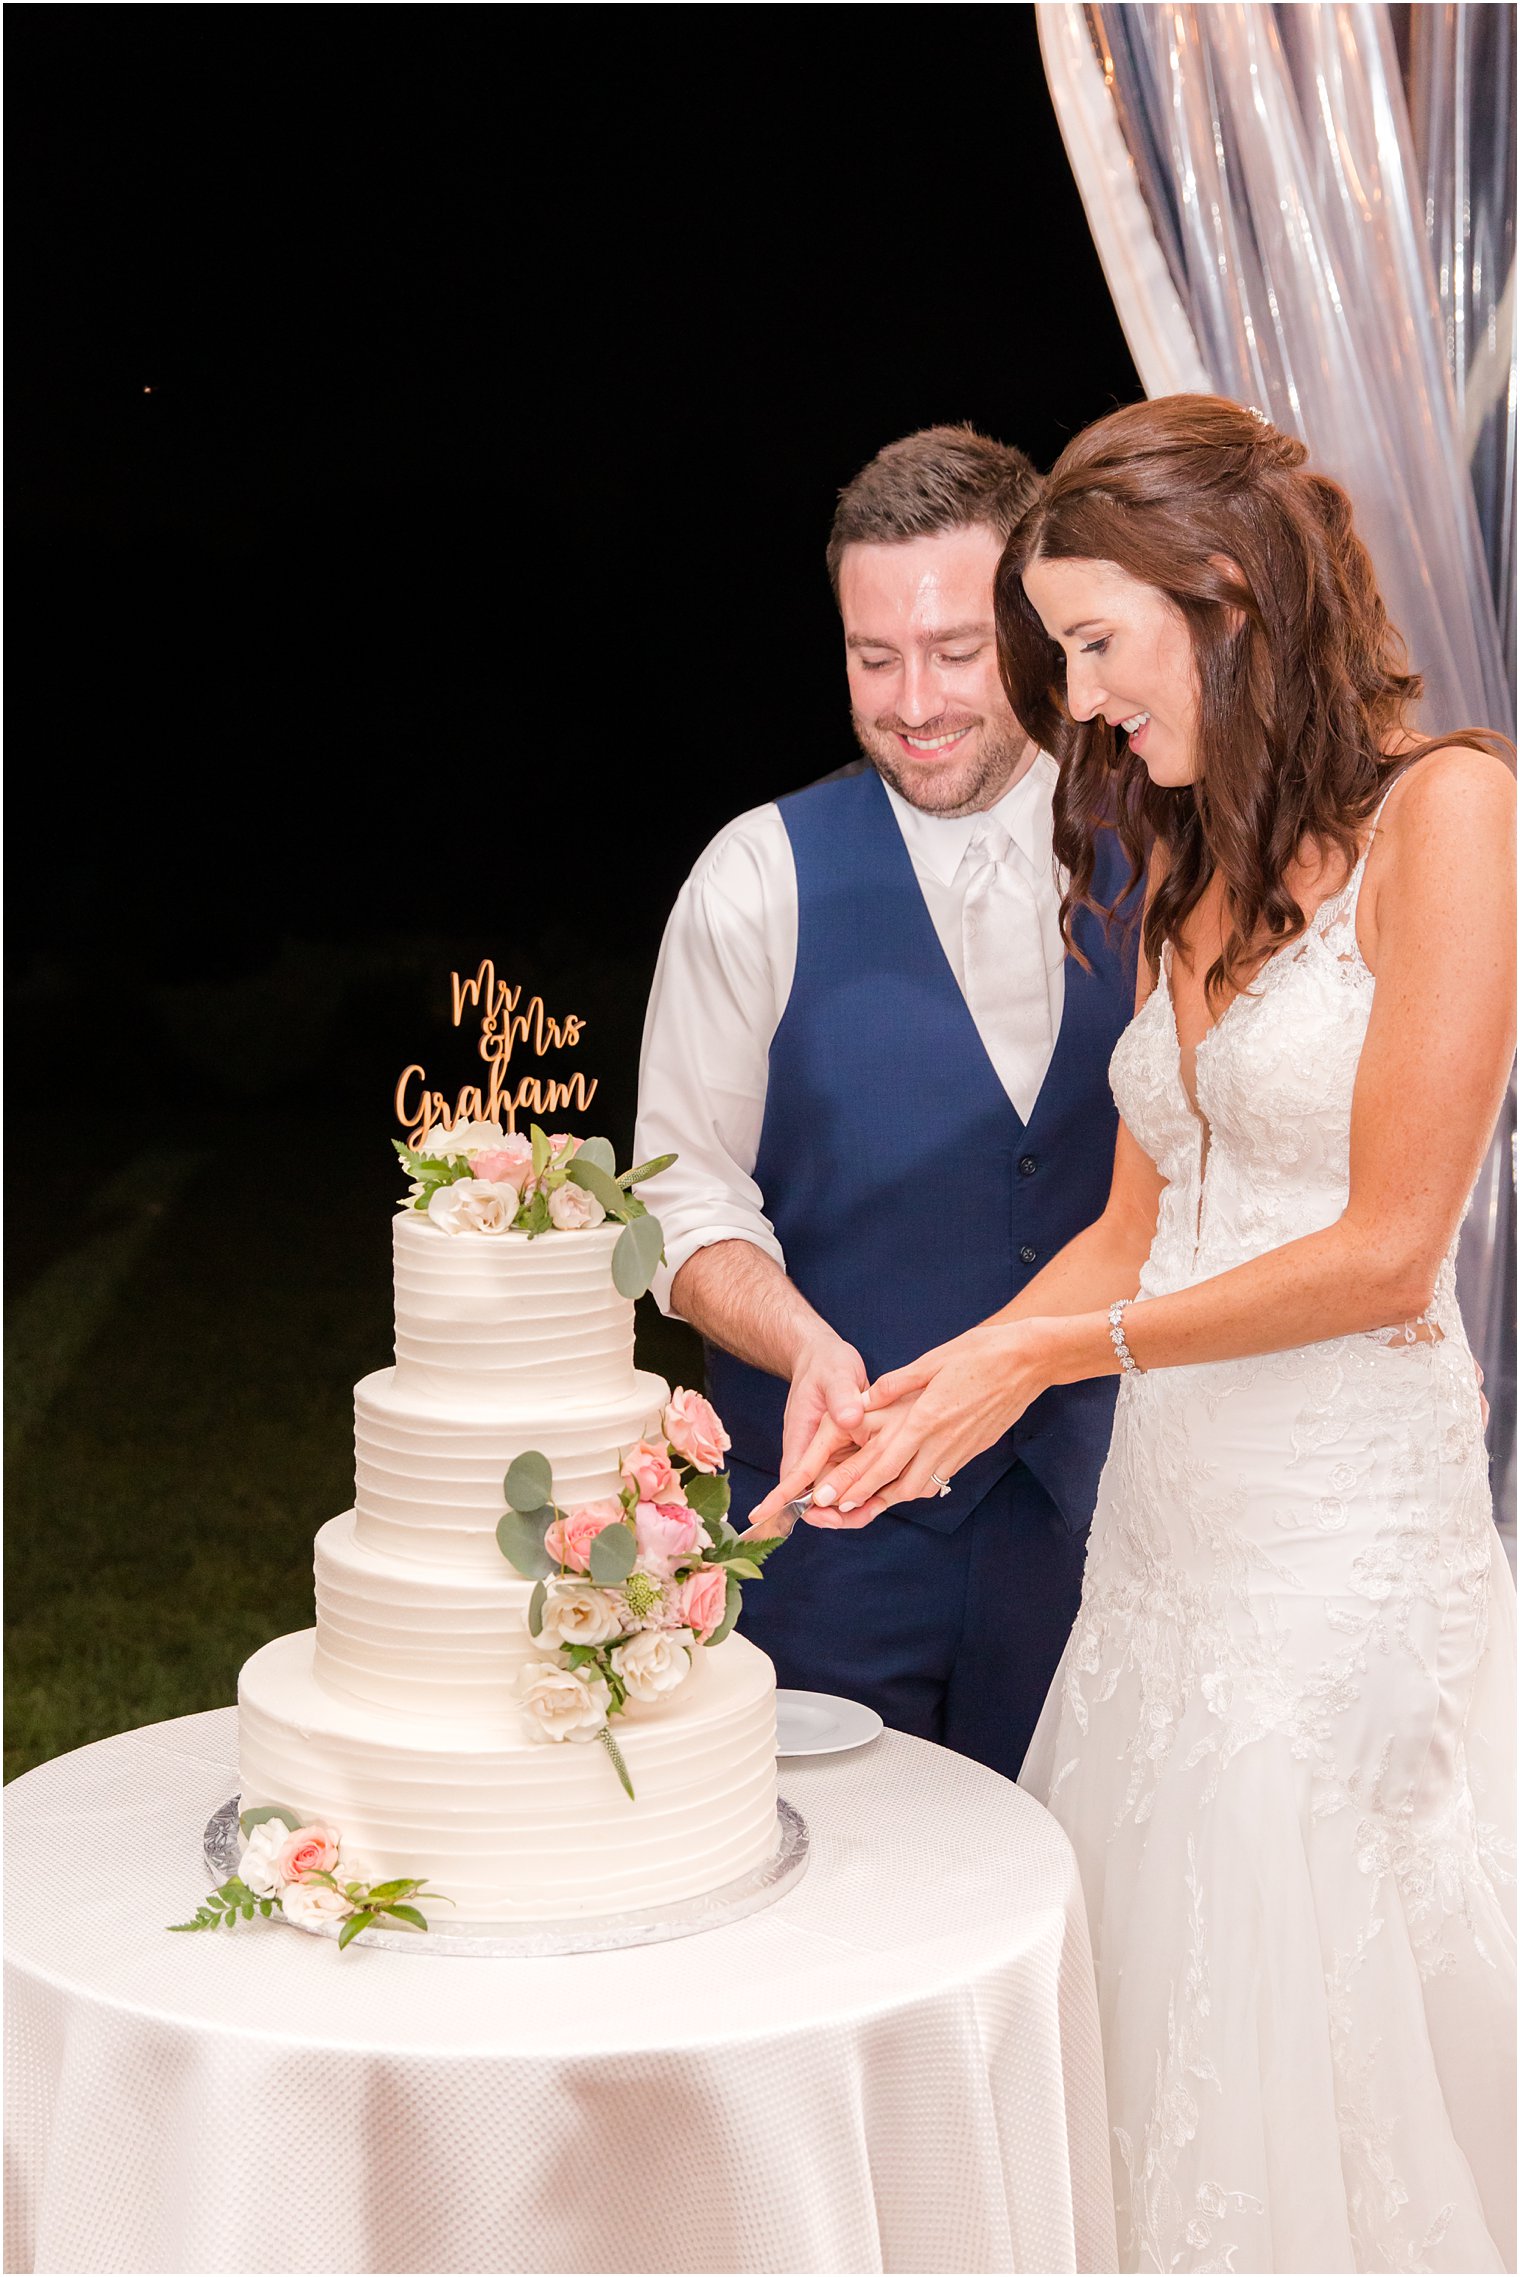 newlyweds cut wedding cake during Princeton NJ wedding reception